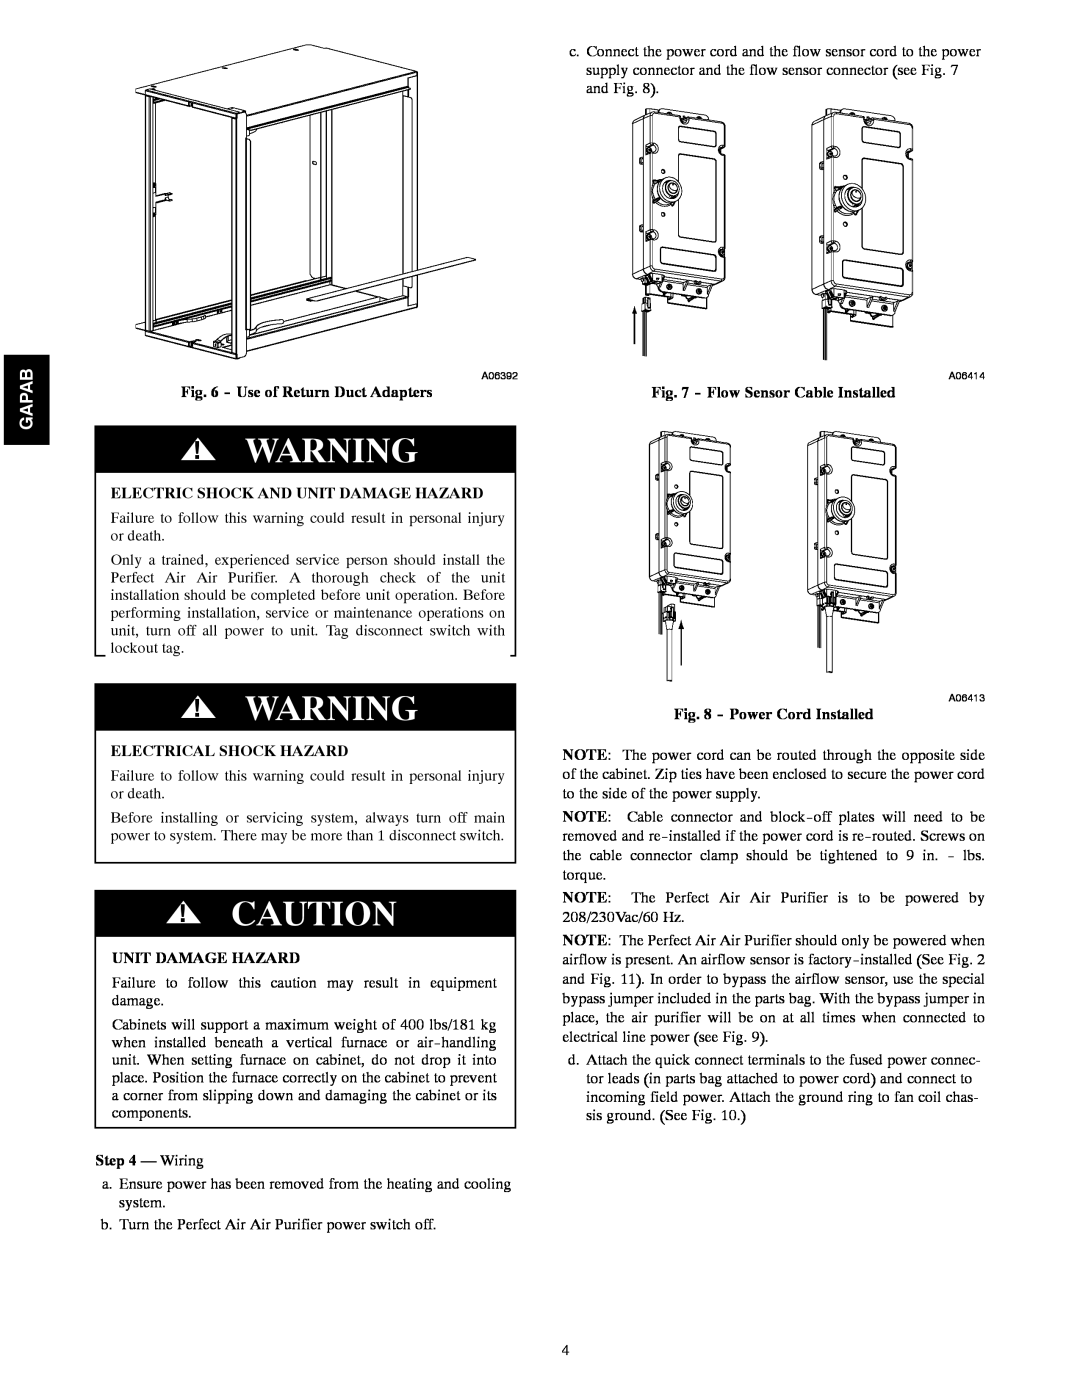 Bryant 1620 Gapab, Use of Return Duct Adapters, Electric Shock And Unit Damage Hazard, Electrical Shock Hazard, Wiring 